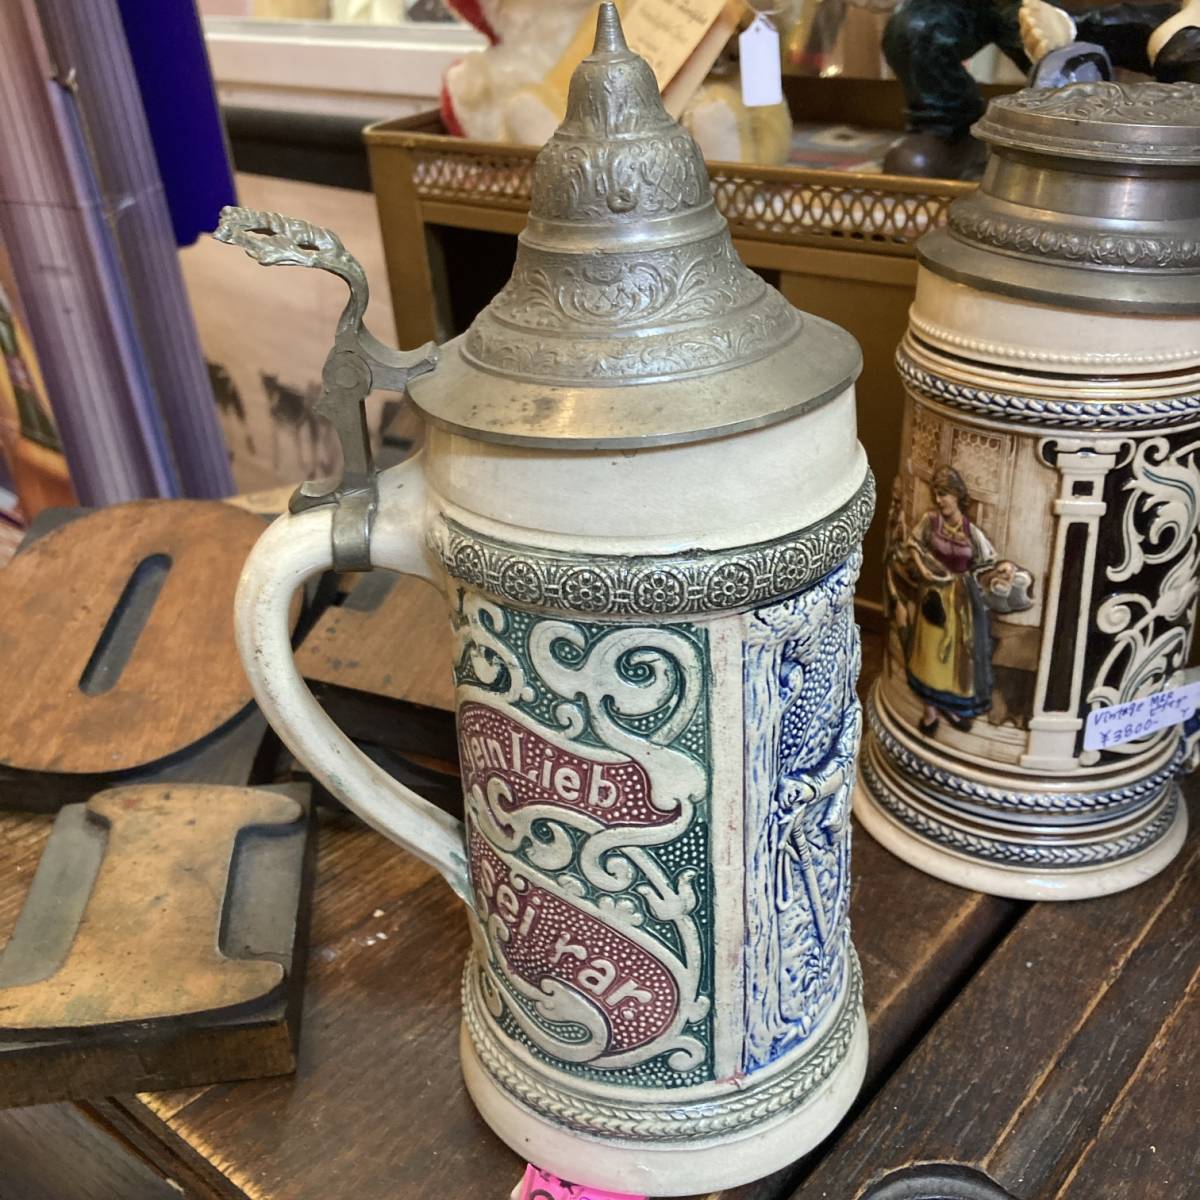  Vintage * Germany made ceramics made Via mug ②* retro, that time thing, beer, beautiful goods 